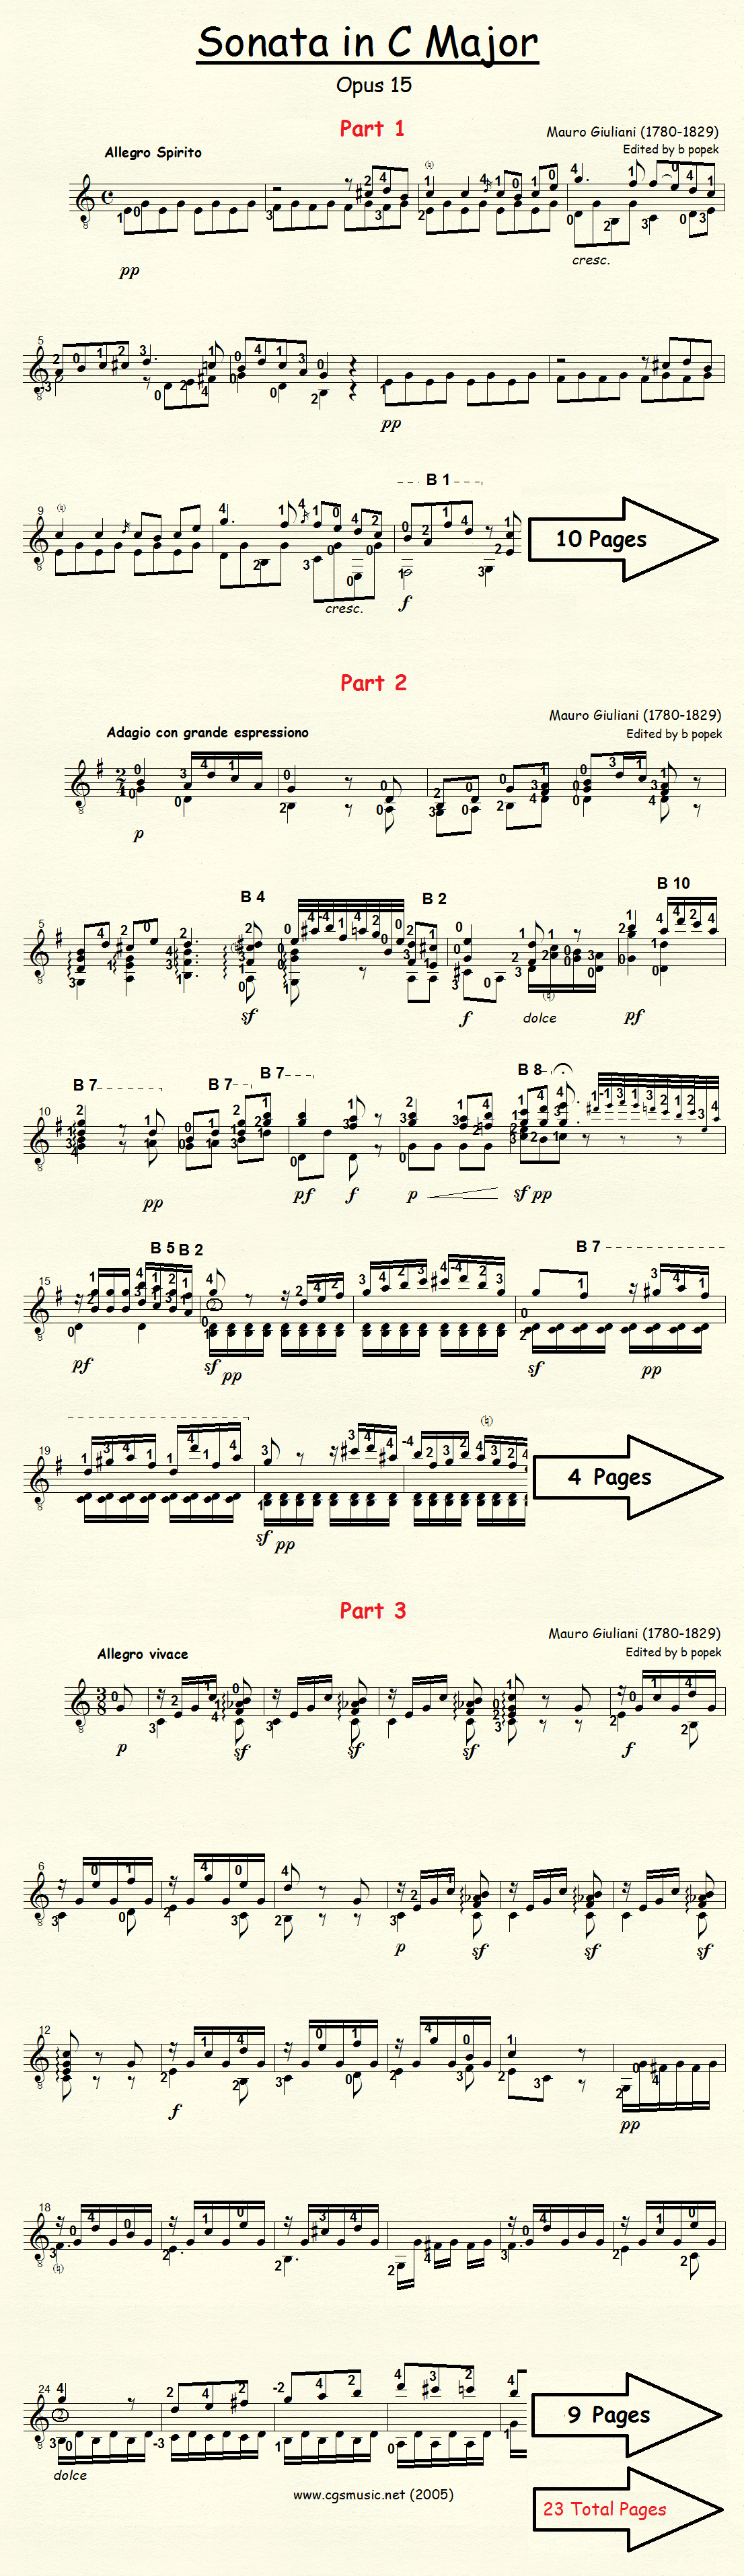 Sonata in C Major Op 15 (Giuliani) for Classical Guitar in Standard Notation